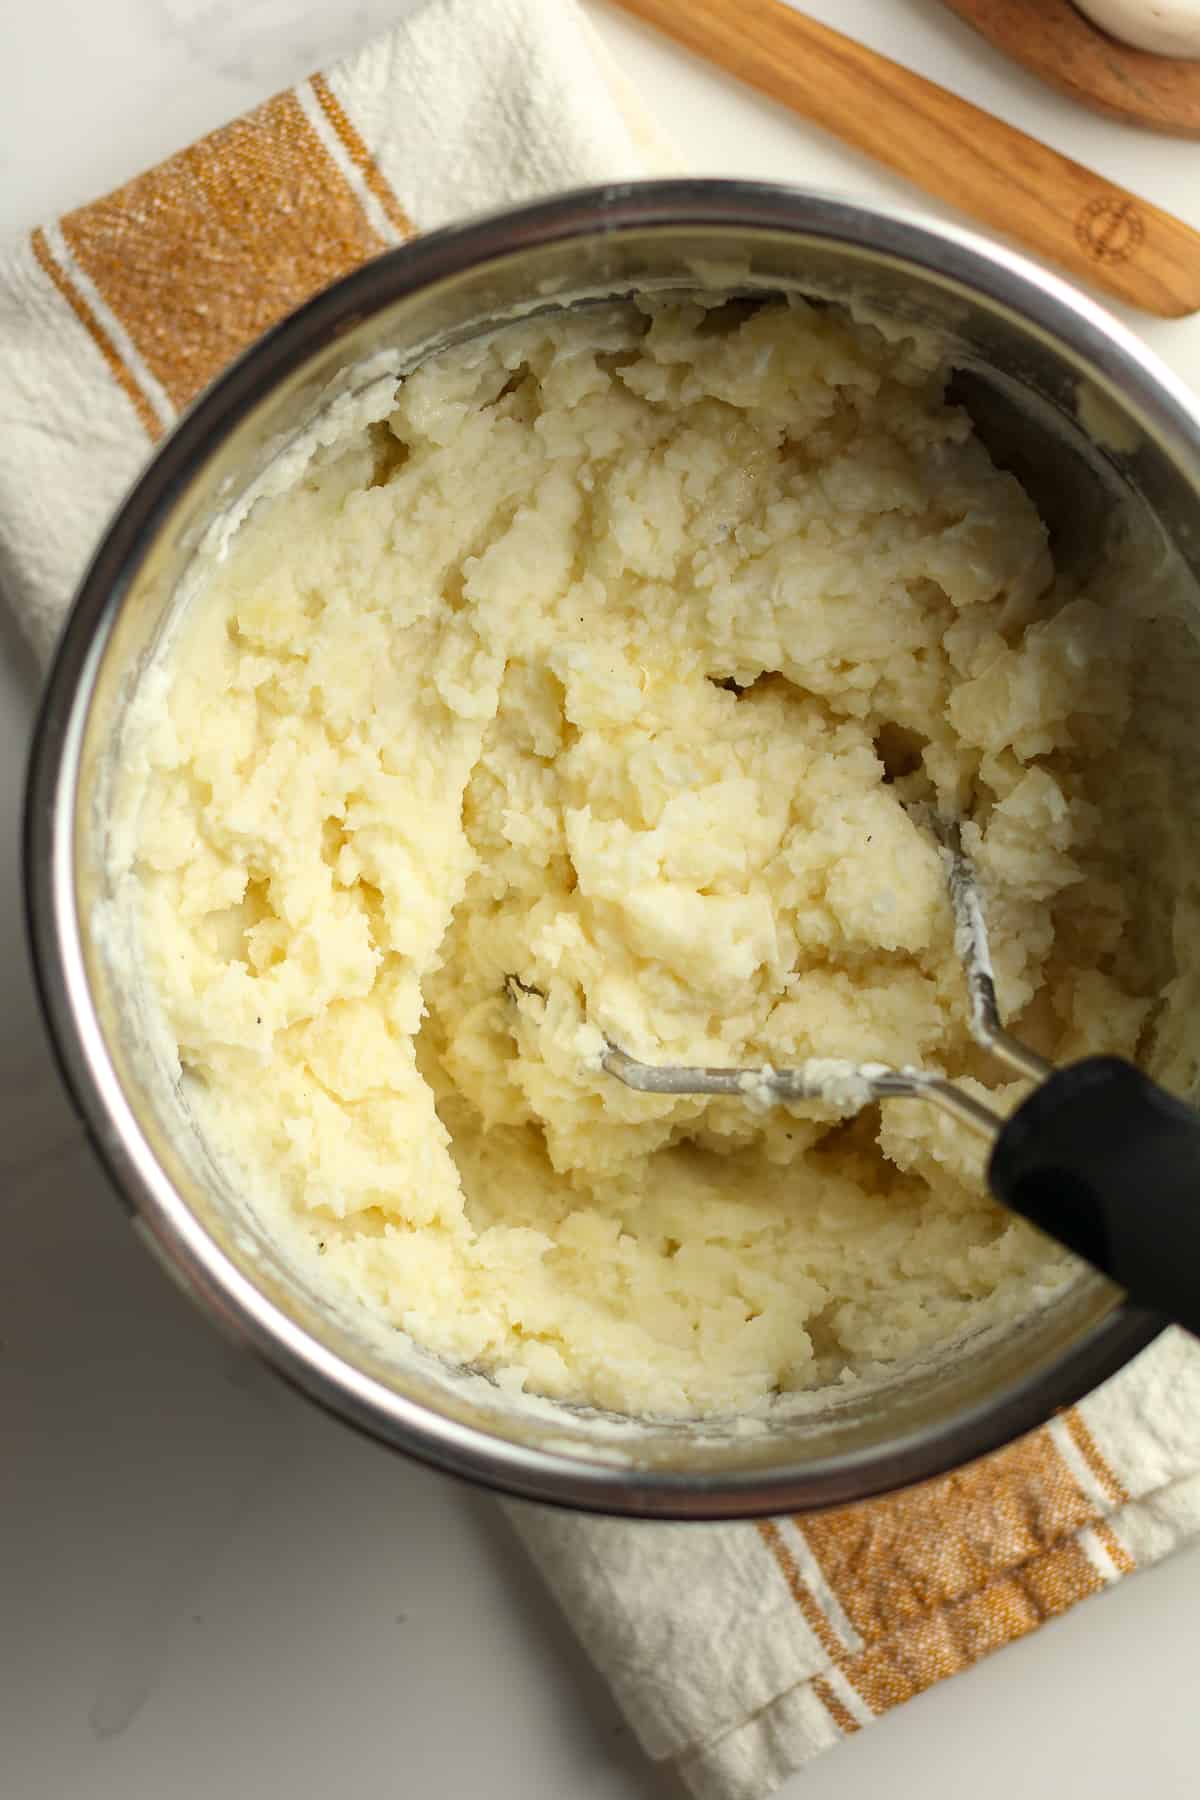 A potato masher mashing the potatoes.